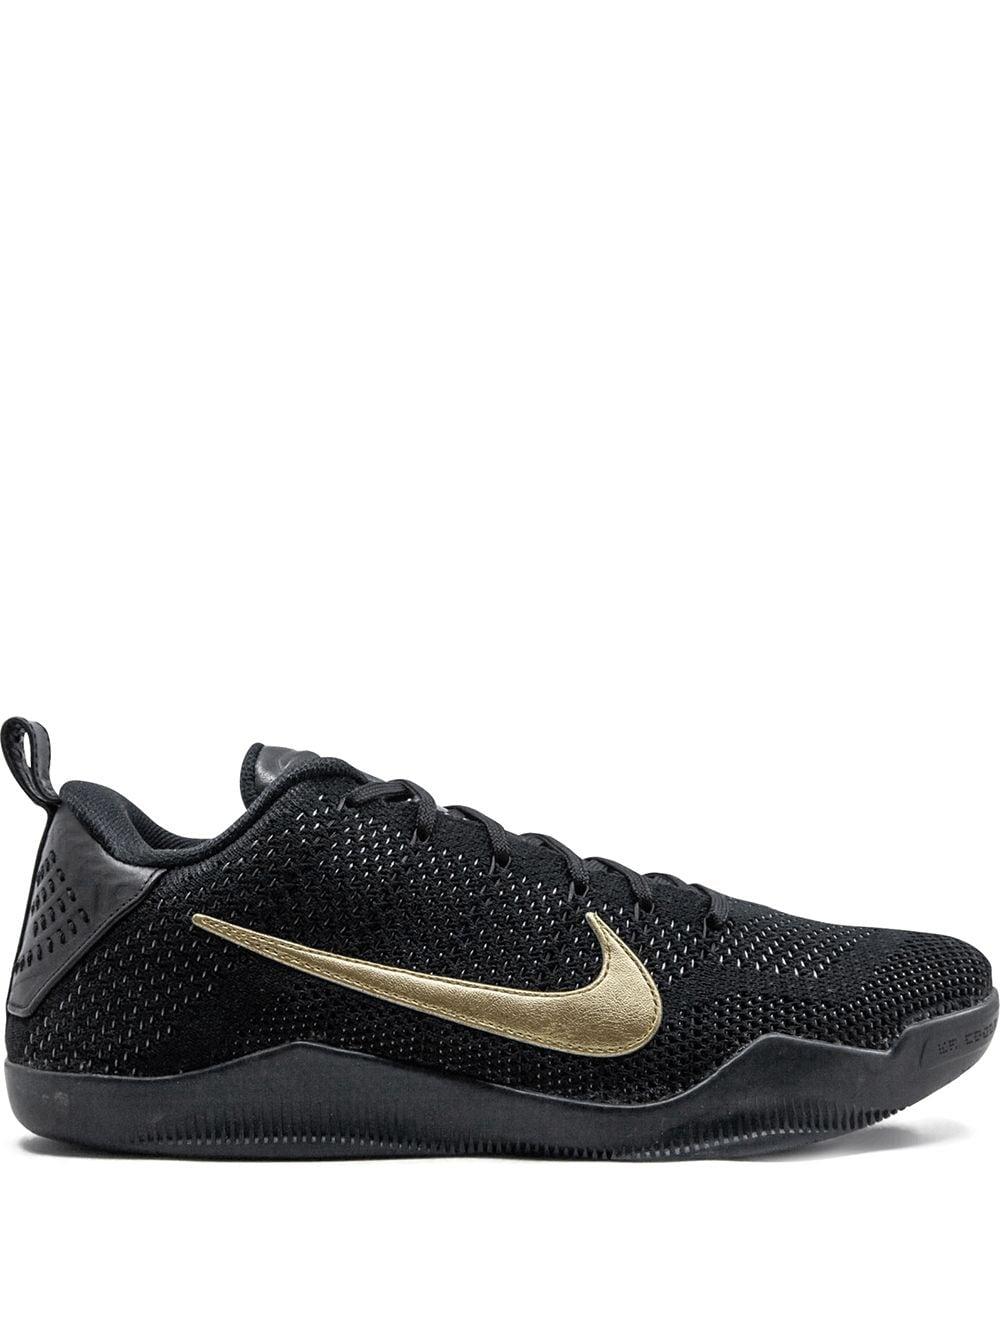 Nike Kobe 11 Elite Low FTB (869459-001 